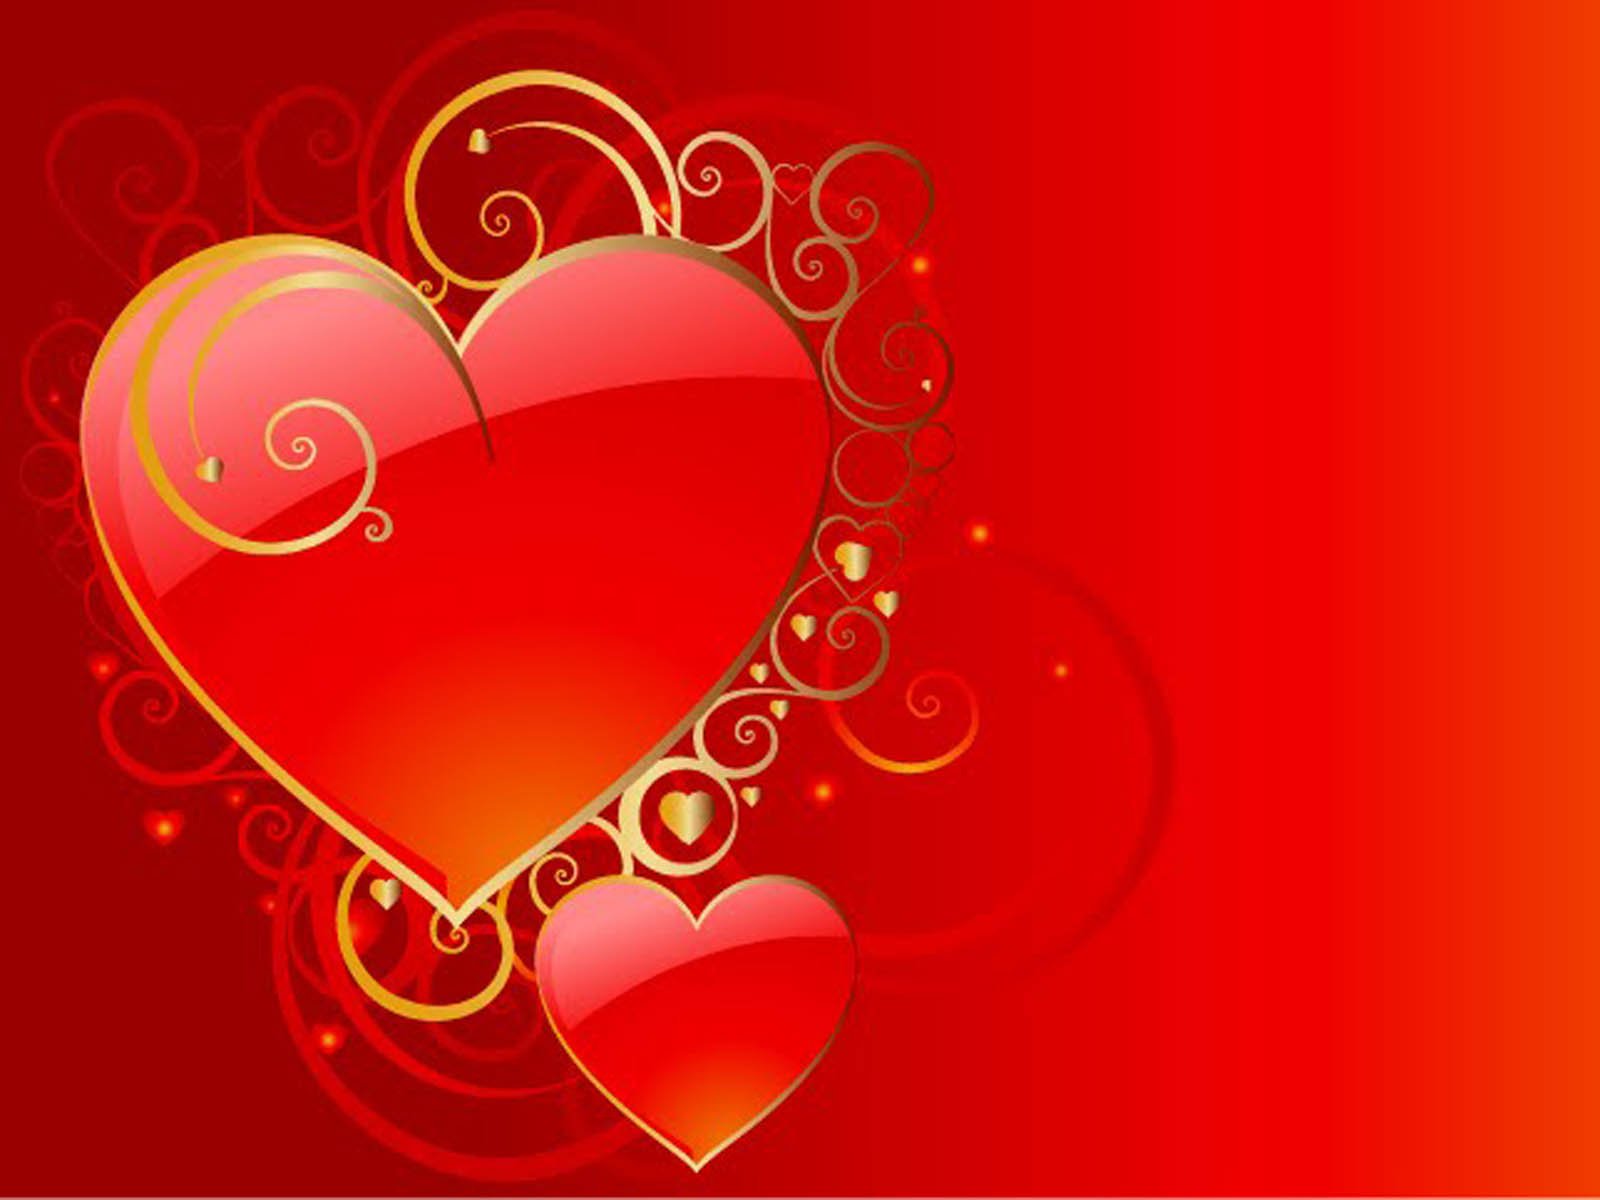 Heart Wallpapers Love Heart Desktop Wallpapers Love Heart Desktop 1600x1200